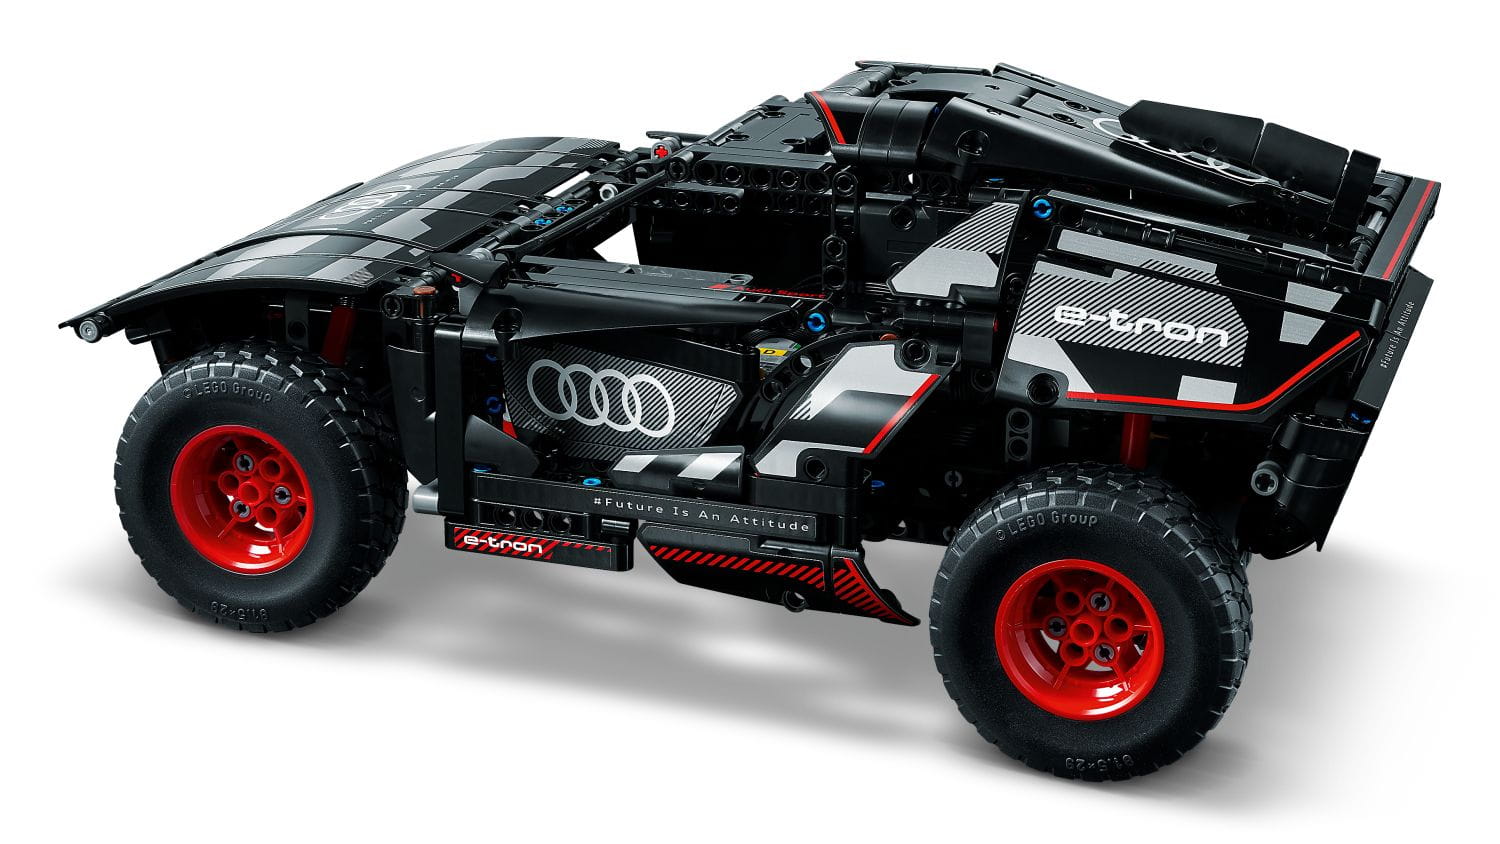 LEGO Technic Audi RS Q e-tron Control+App